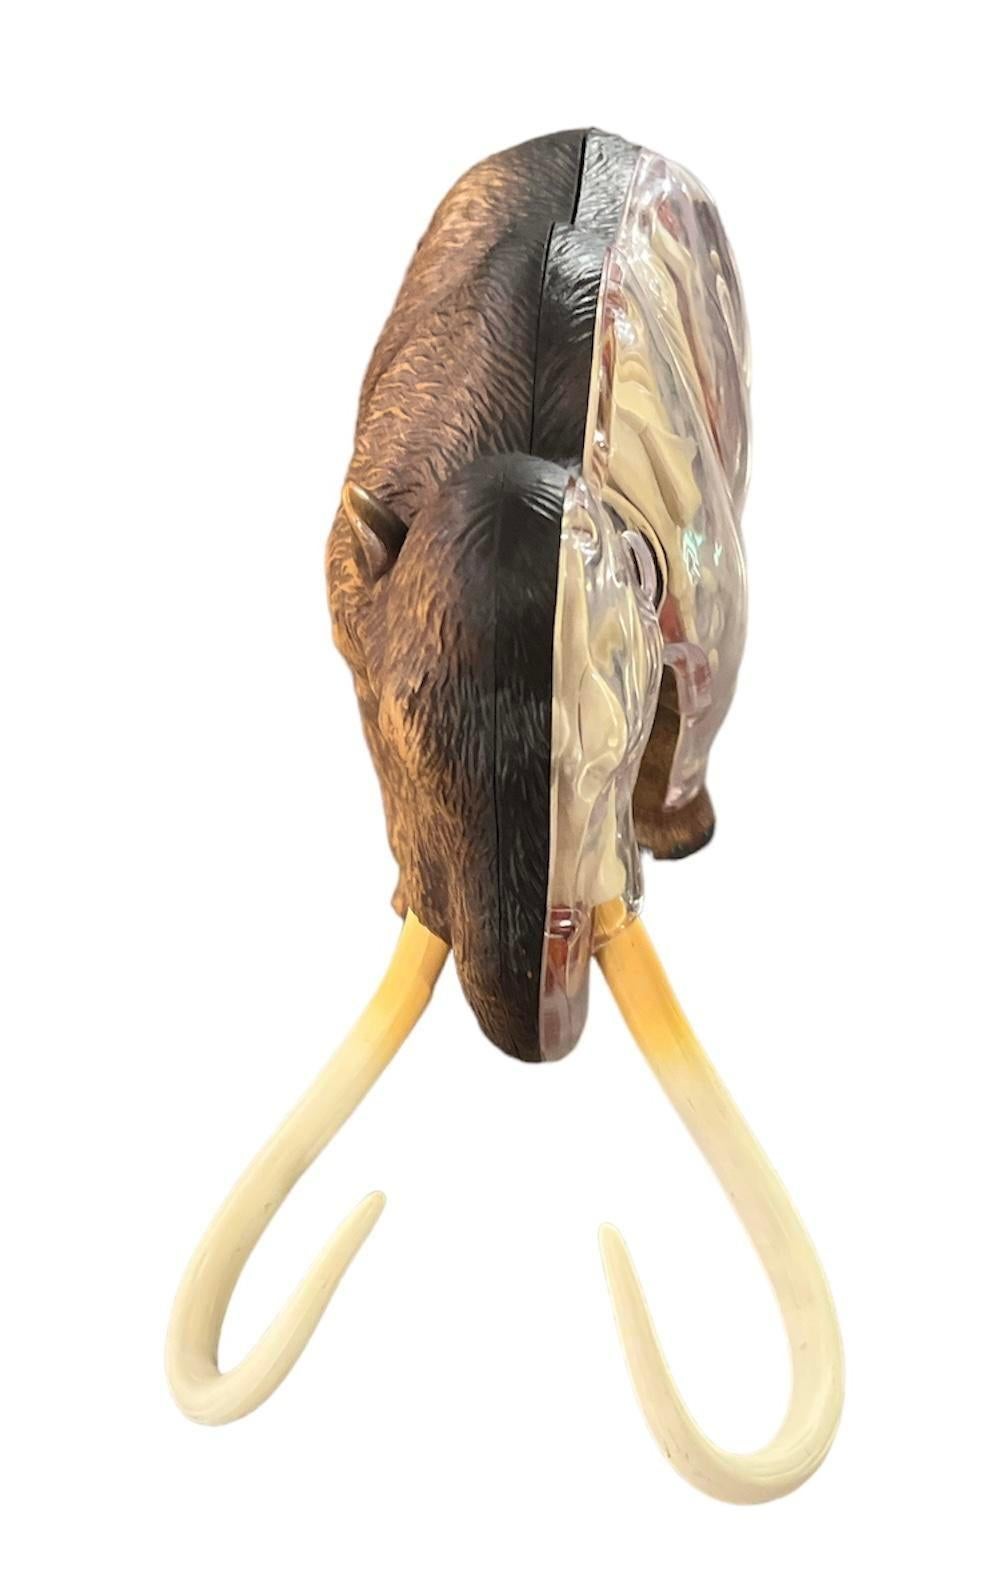 American 4d Woolly Mammoth Anatomy Model